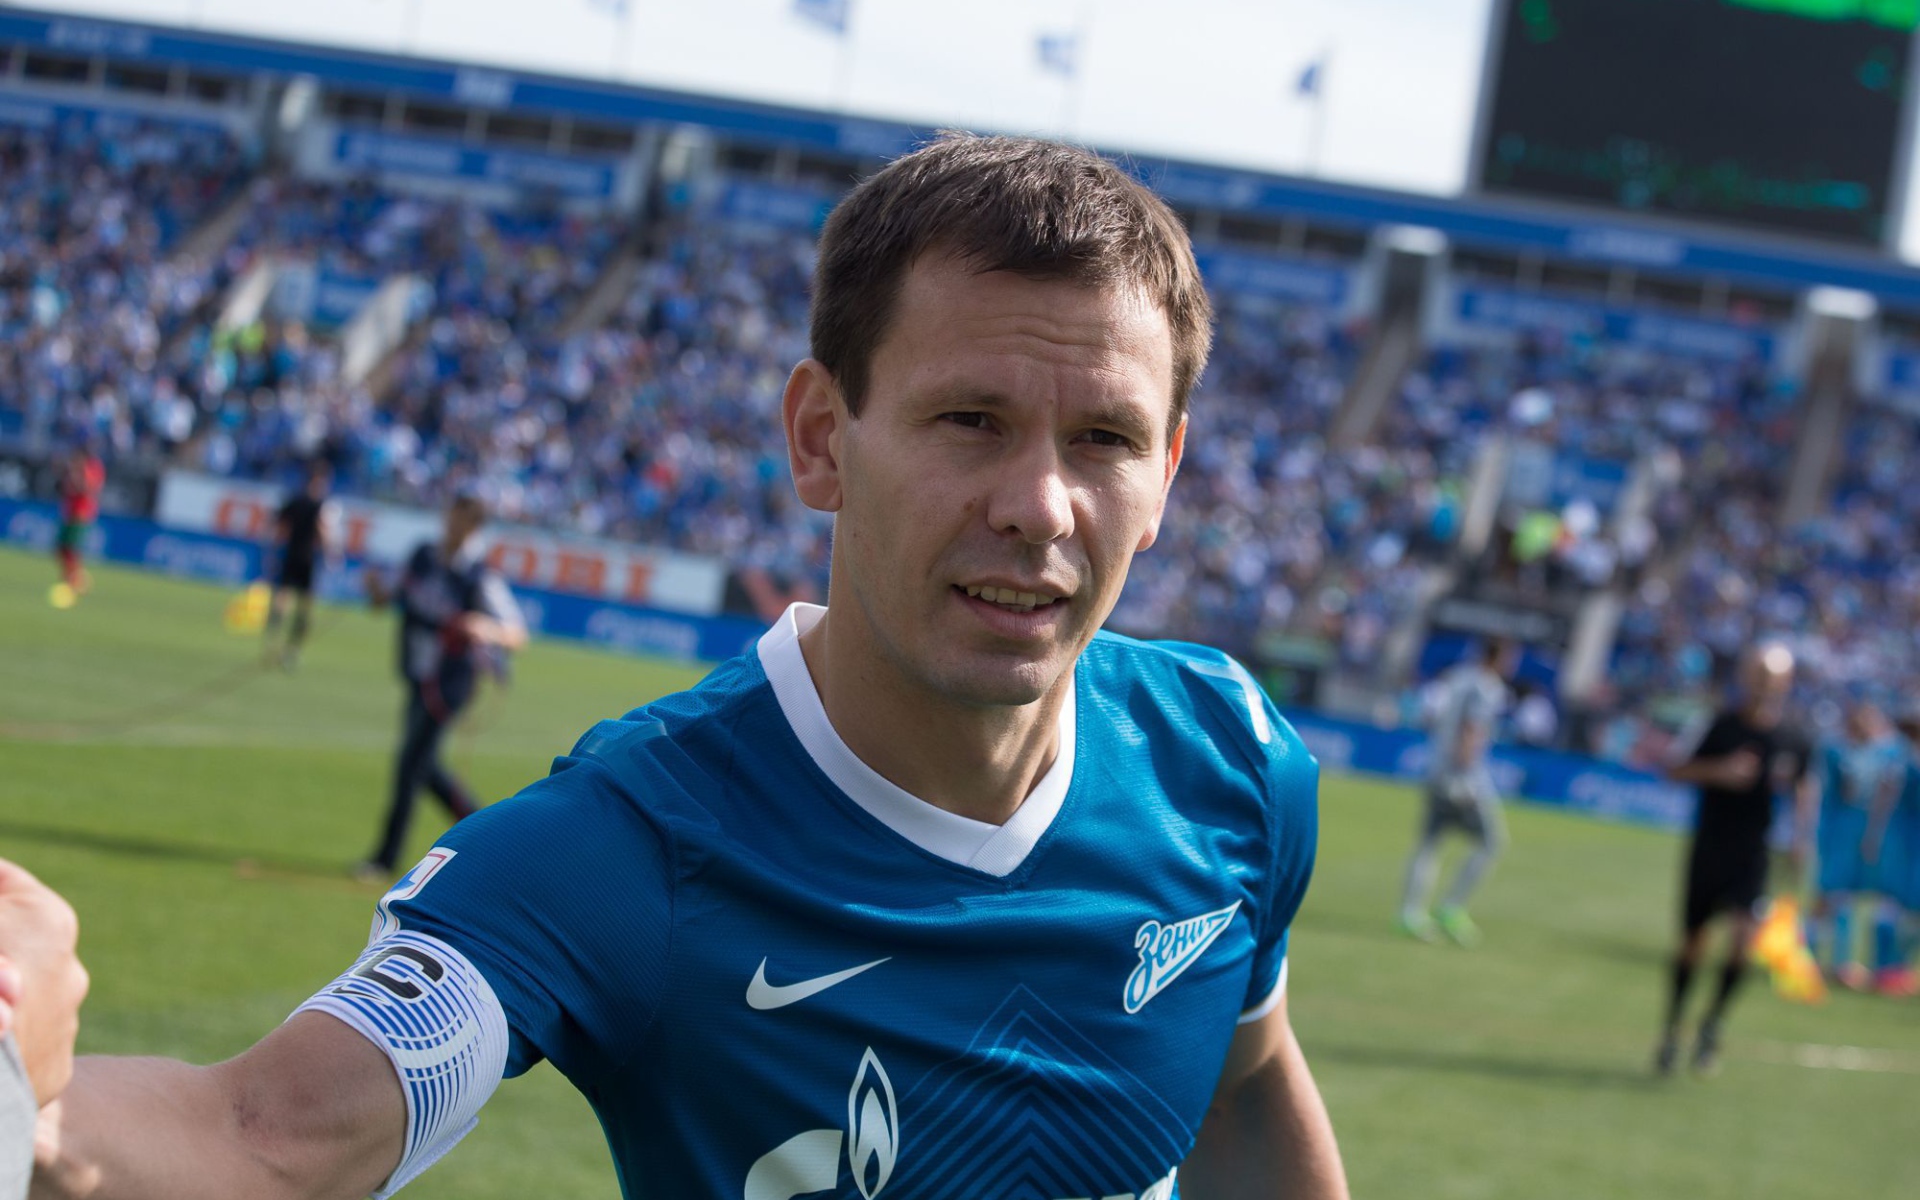 Zenit midfielder Konstantin Zyryanov on the field